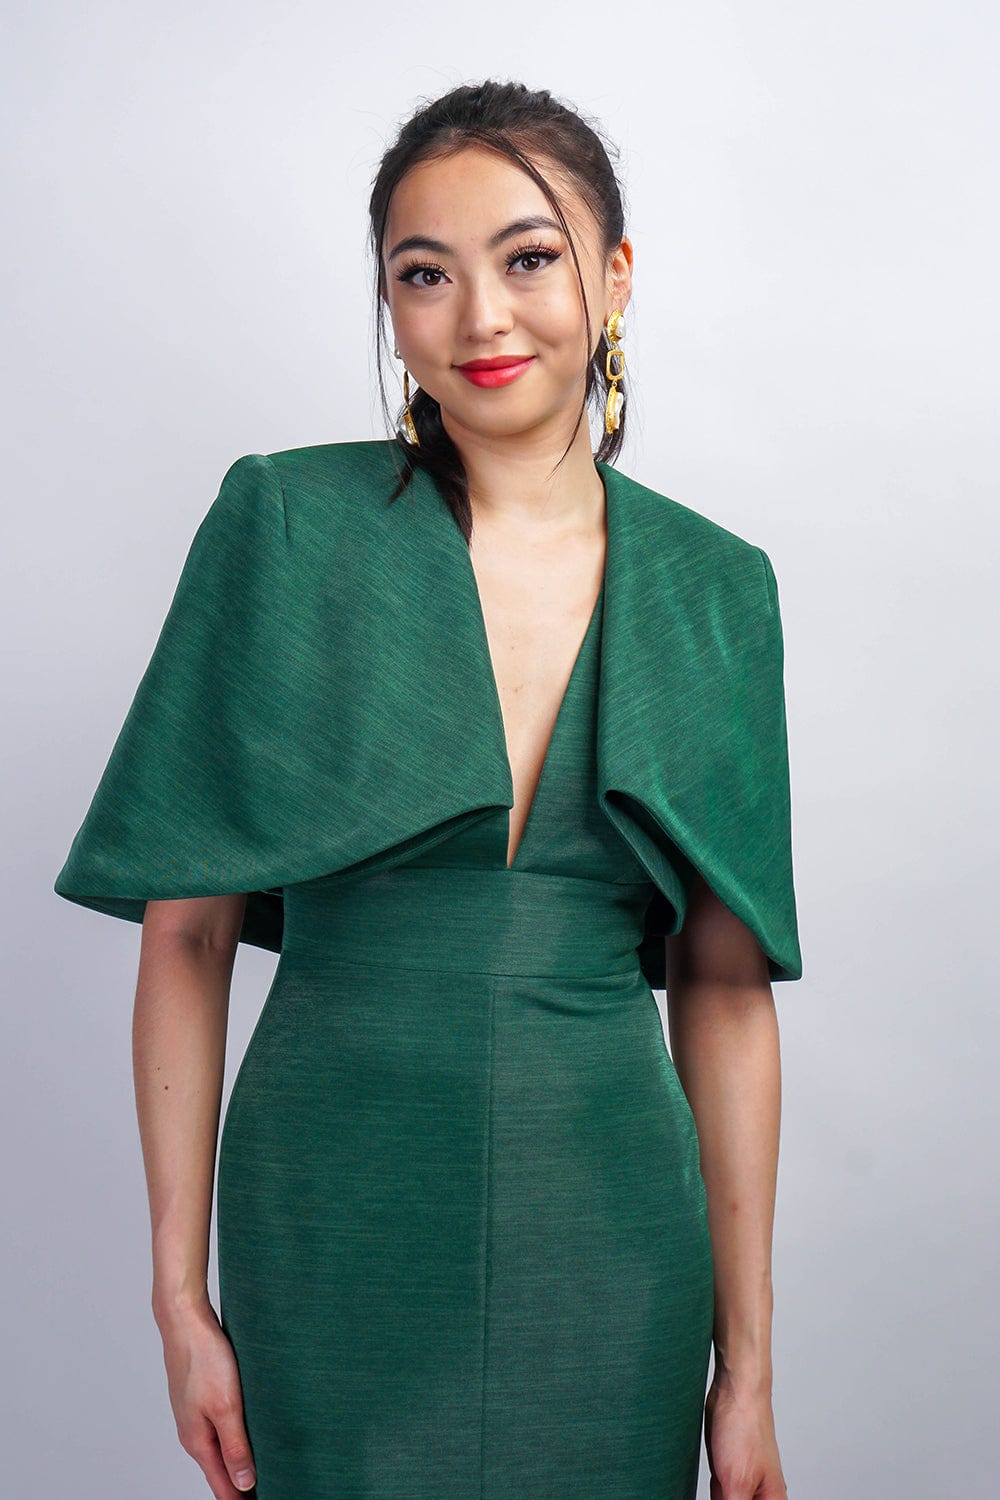 Chloe Dao JACKETS Green Luxe Sheen Short Cape Jacket